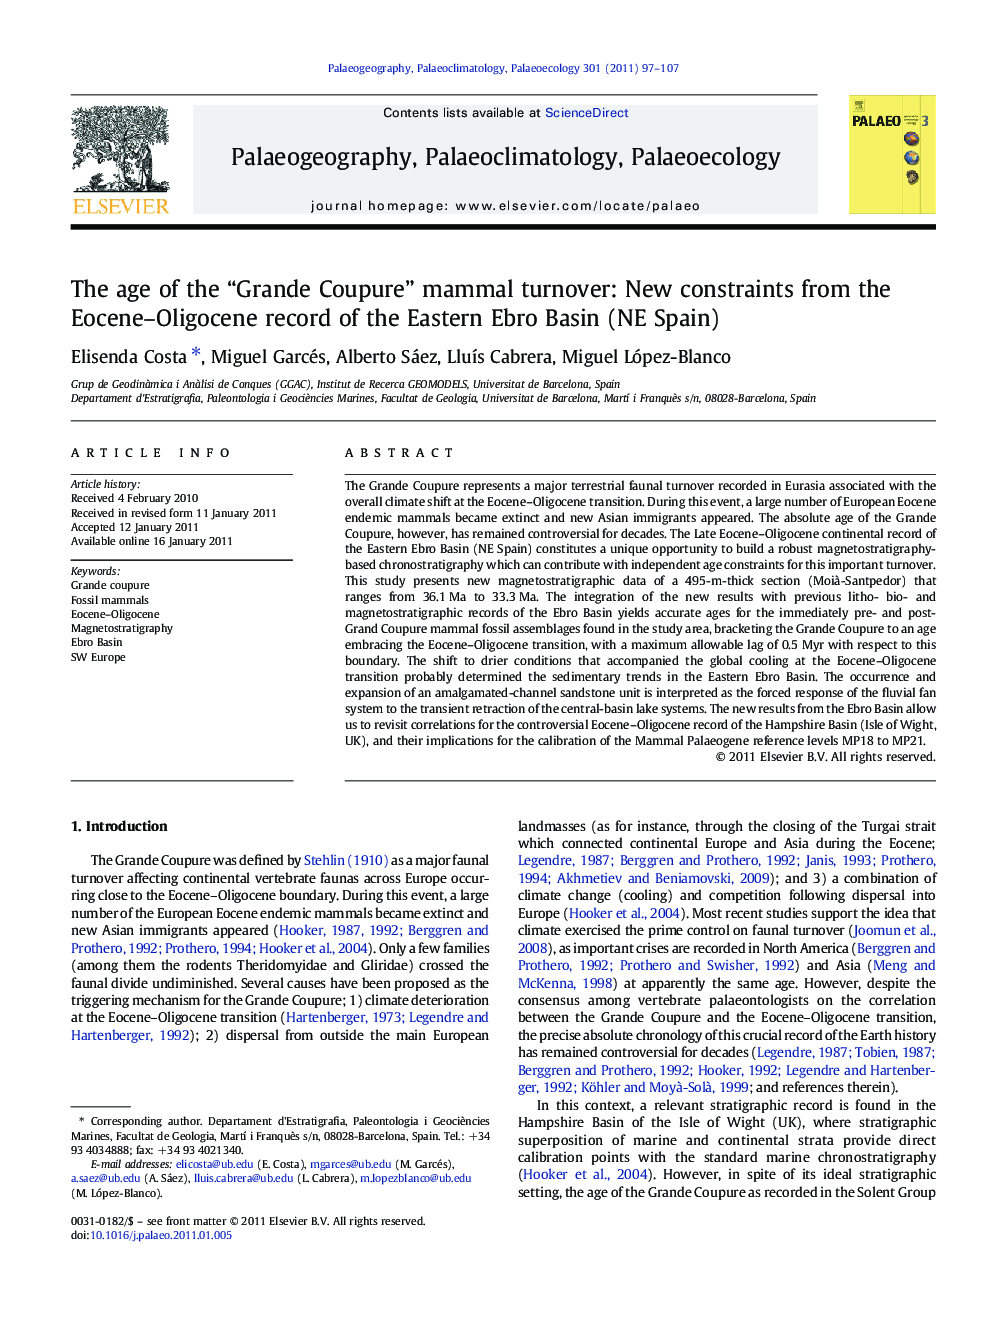 The age of the “Grande Coupure” mammal turnover: New constraints from the Eocene–Oligocene record of the Eastern Ebro Basin (NE Spain)